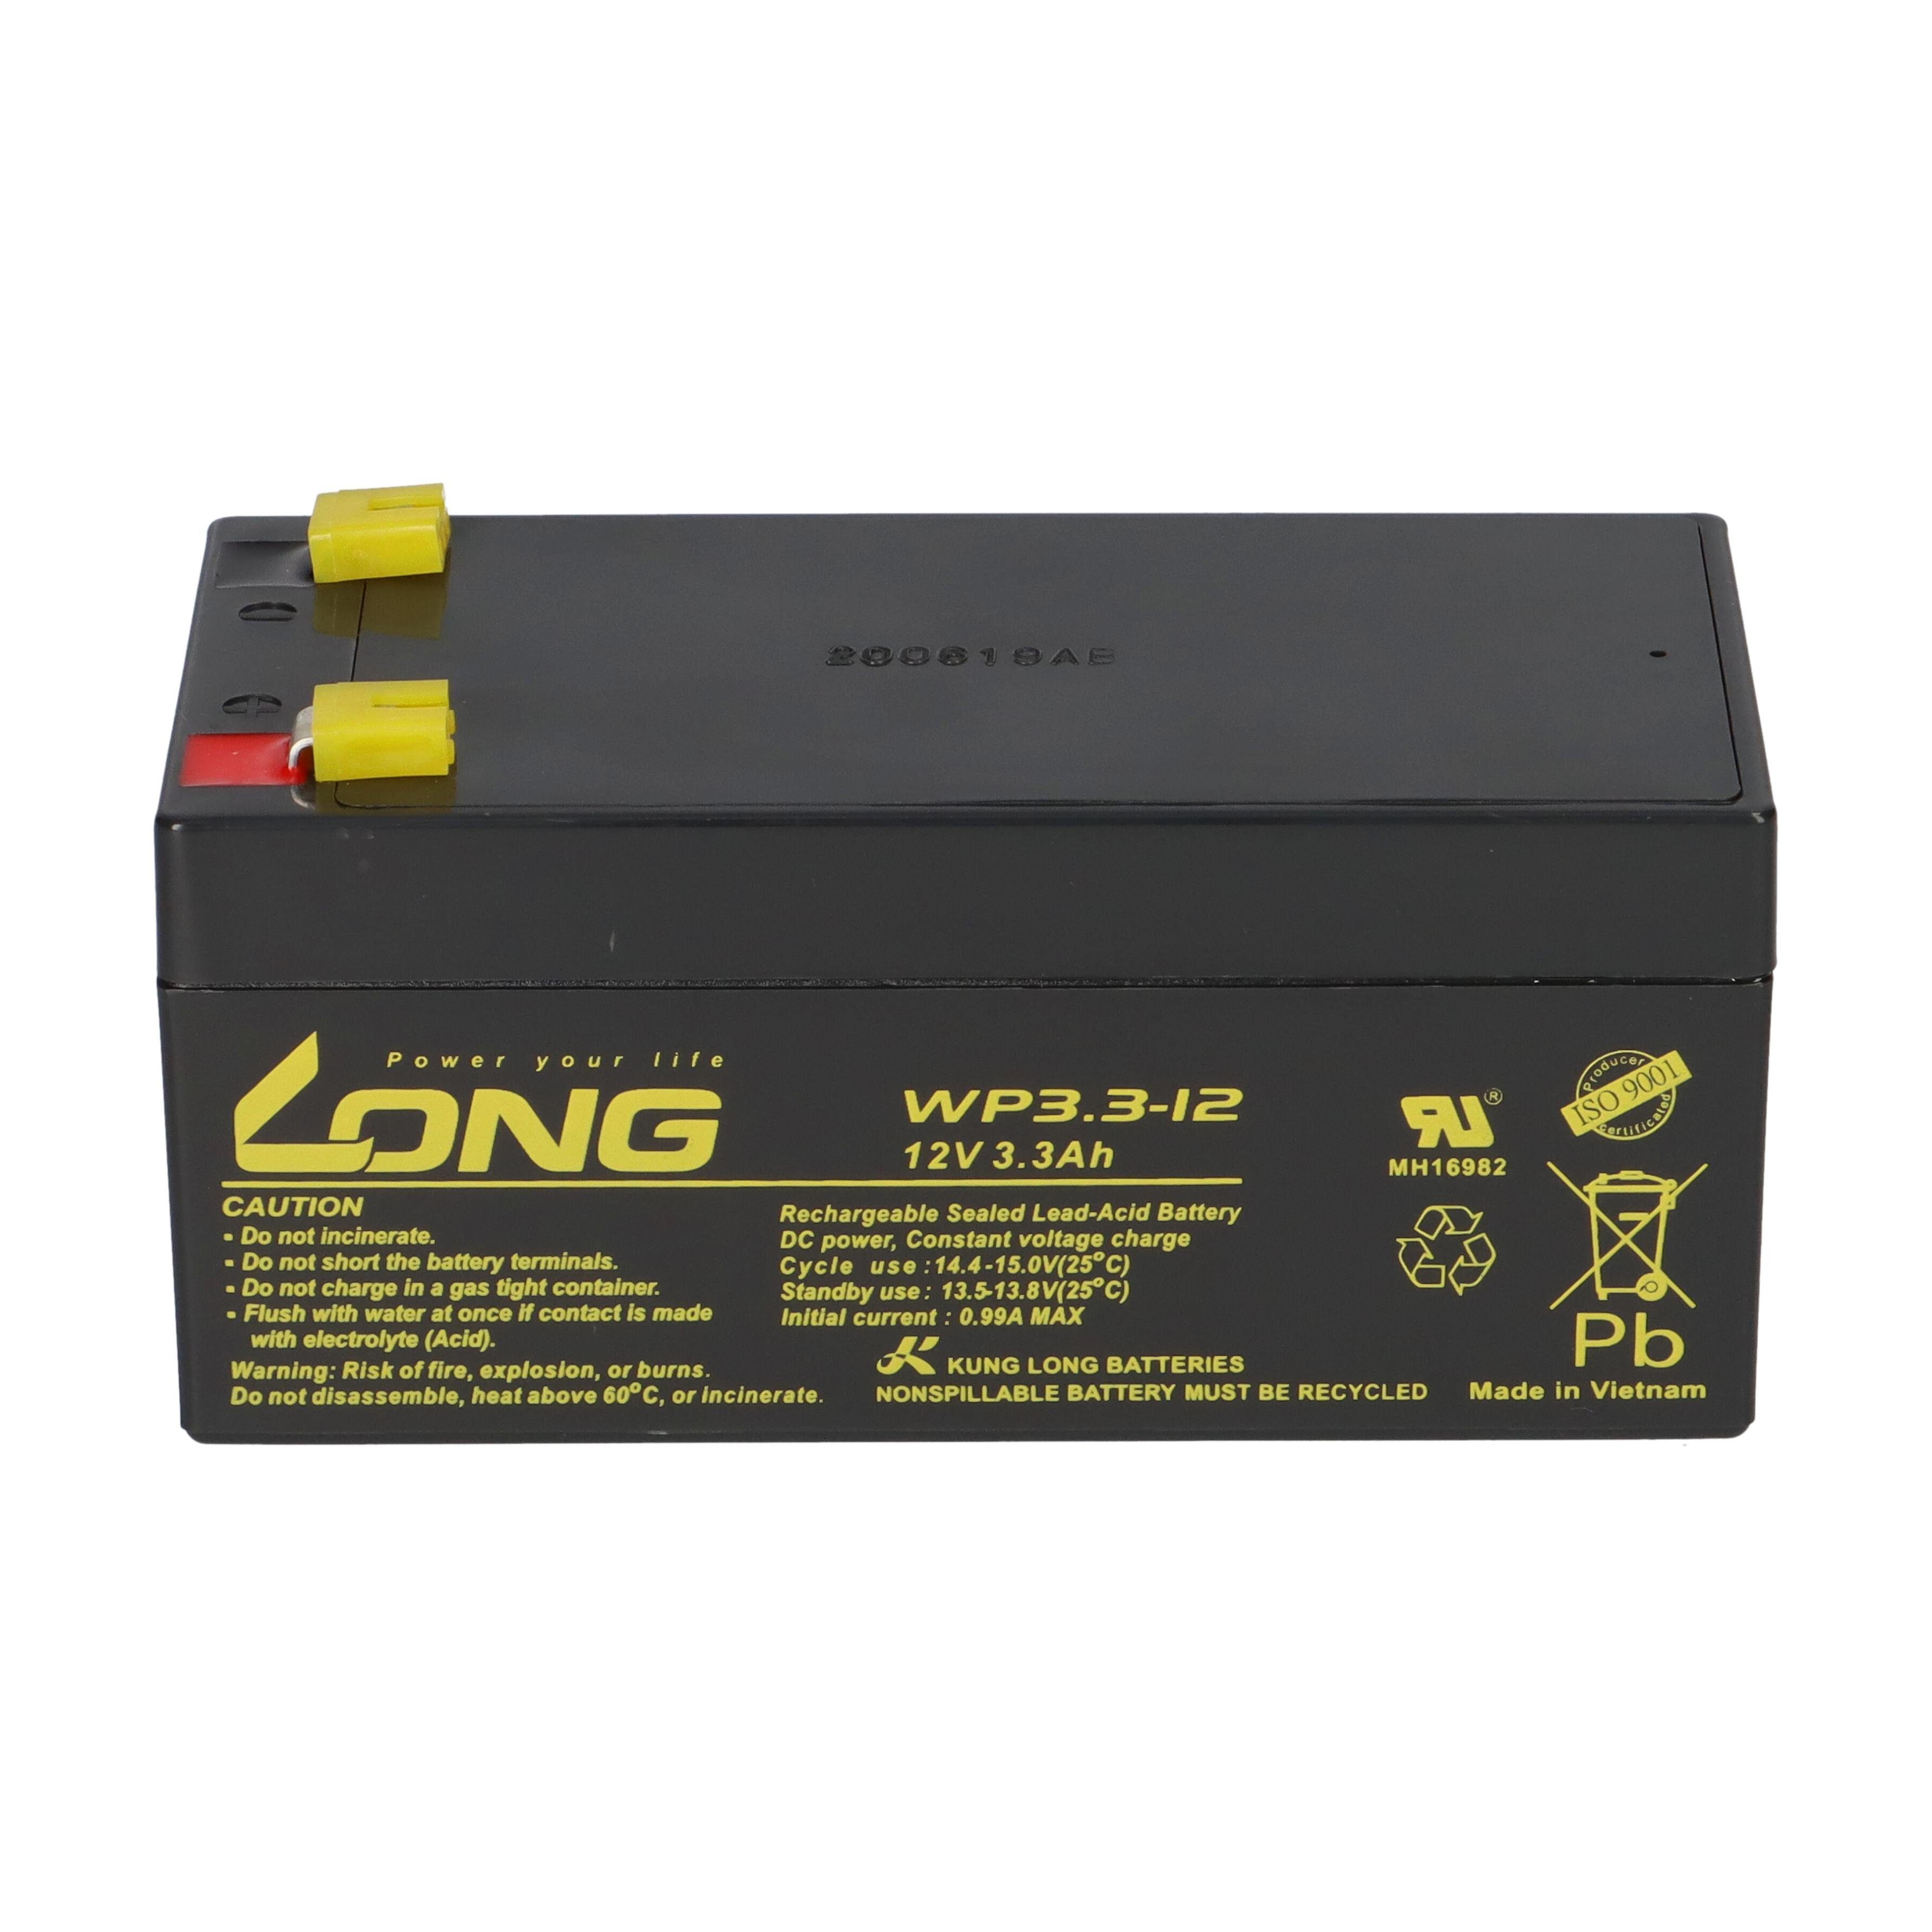 12V battery BAT-LEAD-06 Long Kung Bleiakkus kompatibel 3,3Ah Bleiakku